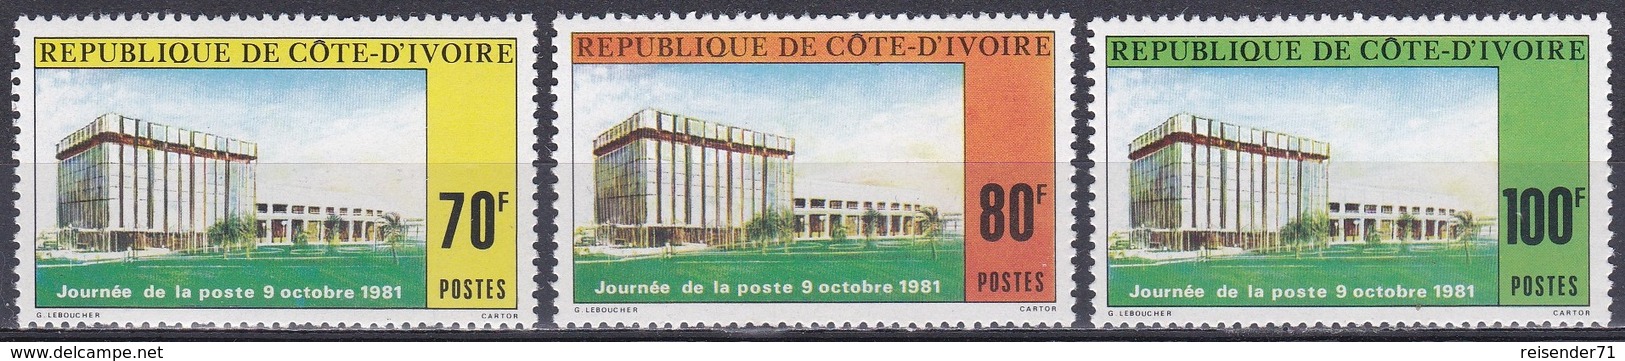 Elfenbeinküste Ivory Coast Cote D'Ivoire 1981 Post Architektur Architecture Bauwerke Gebäude Buildings, Mi. 702-4 ** - Côte D'Ivoire (1960-...)